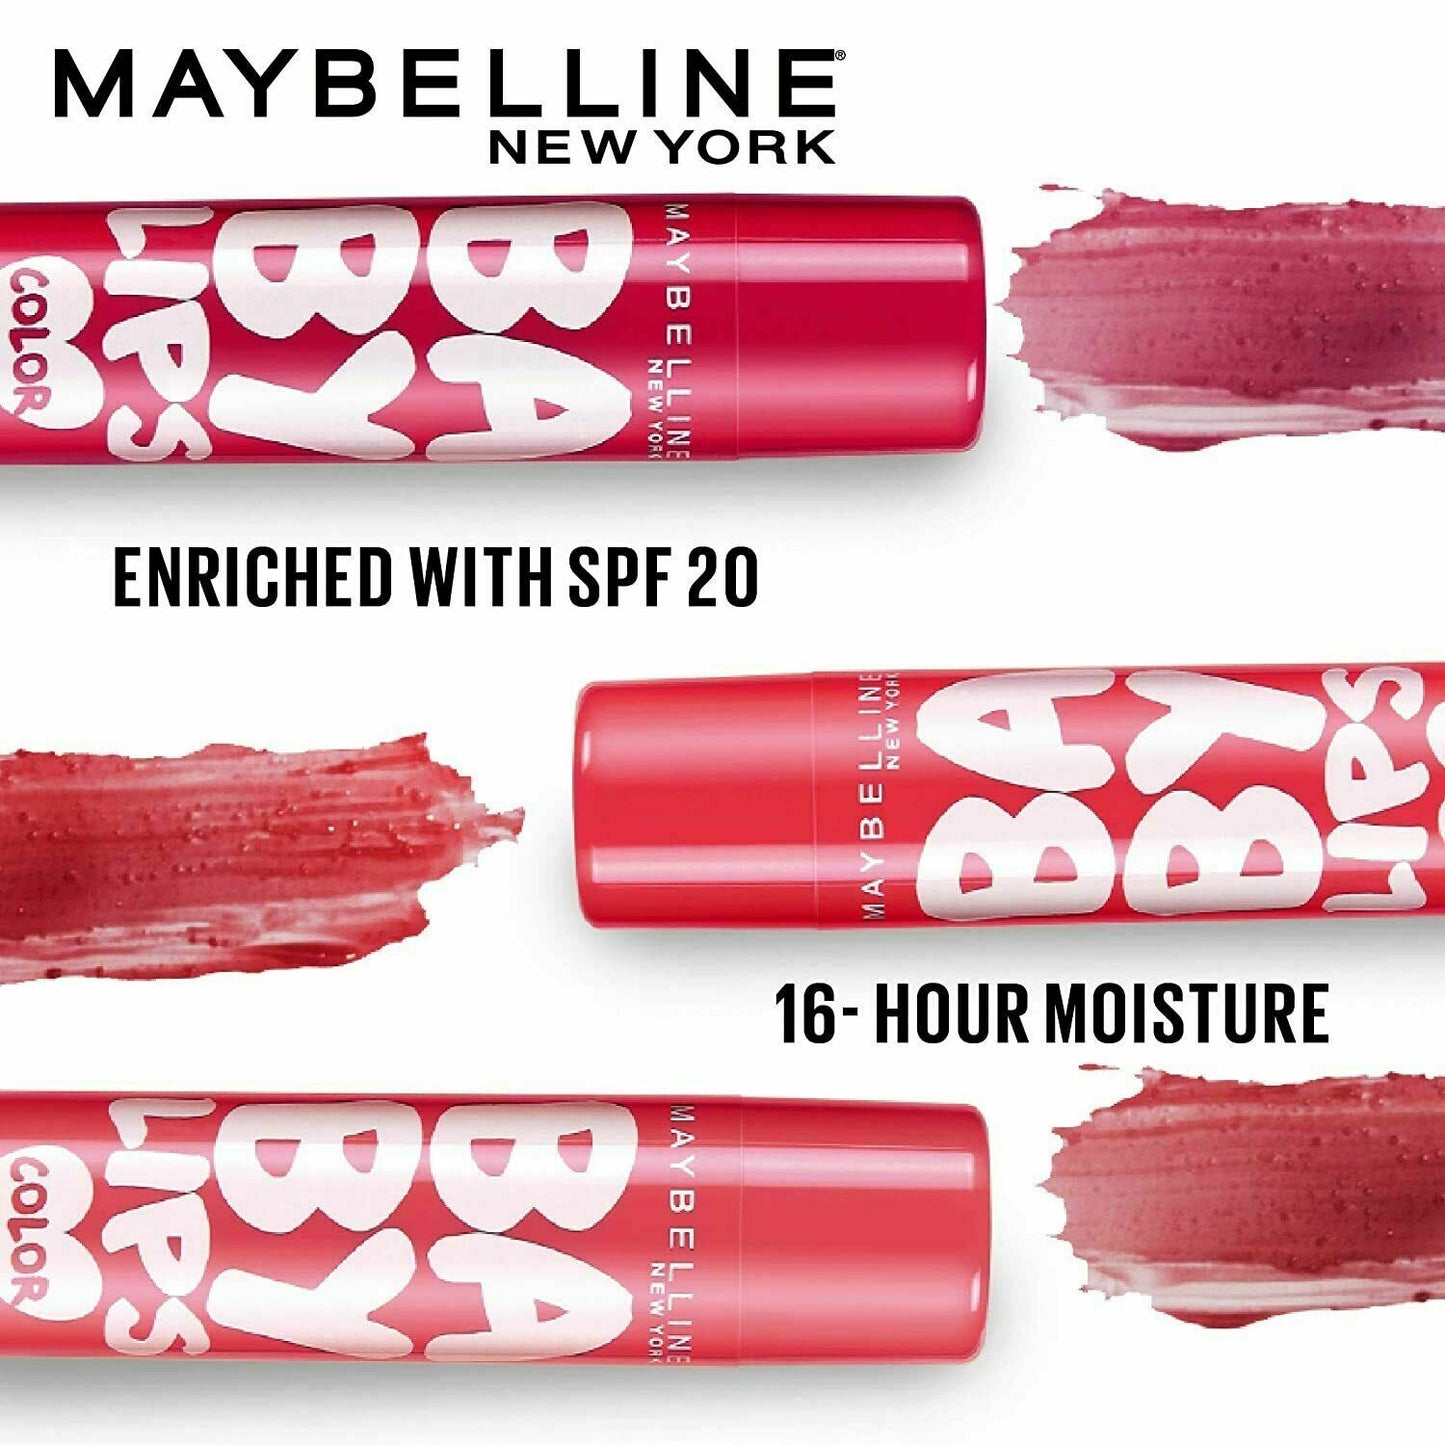 Bundle - Maybelline Baby Lips Twin Pack